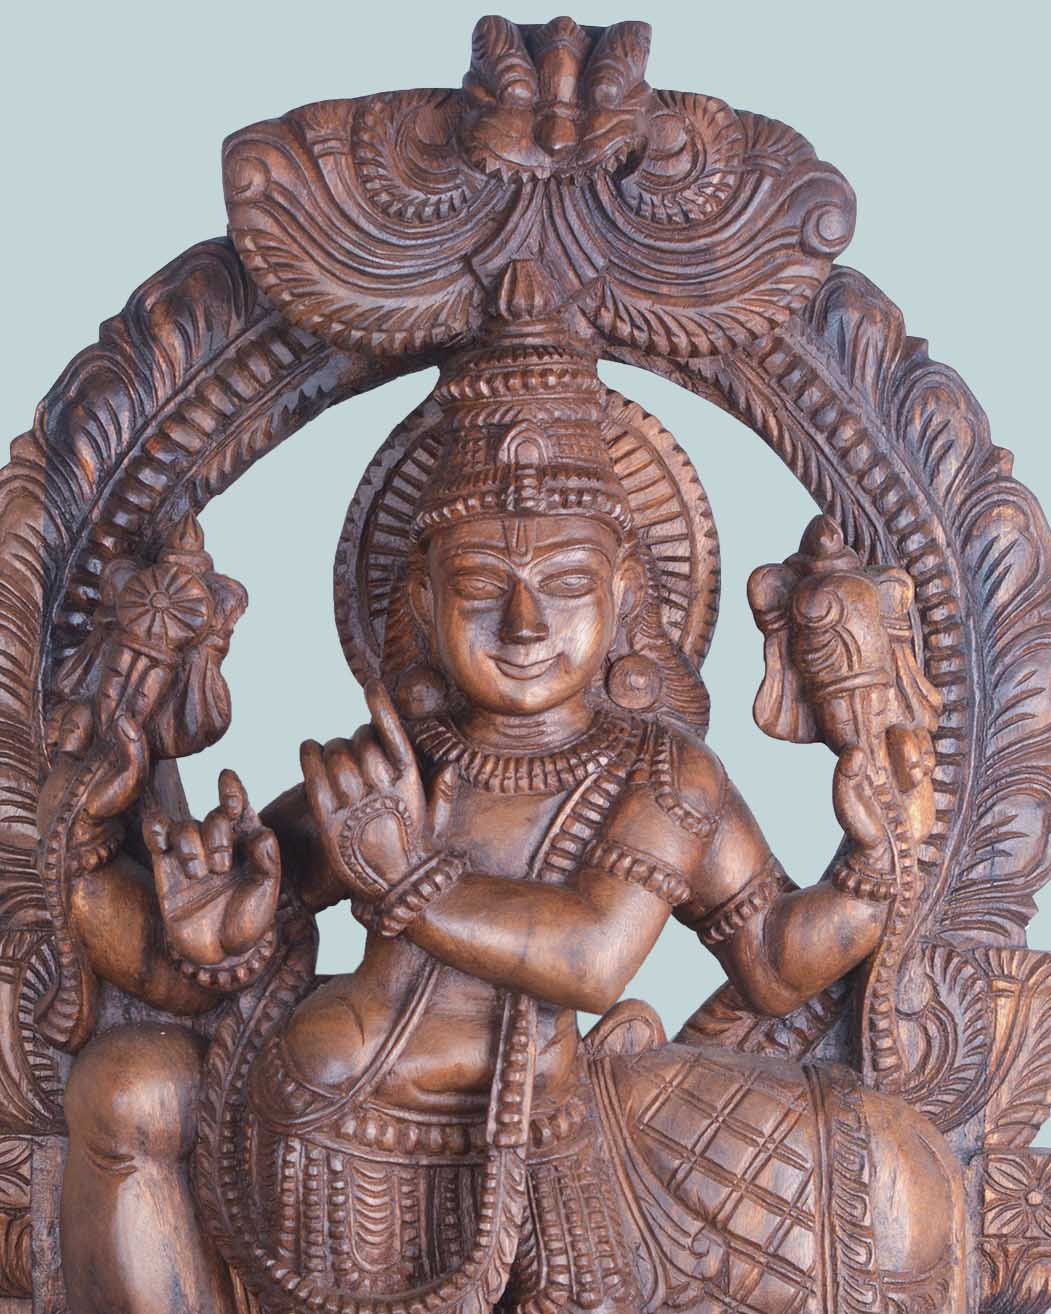 Arch Design Art work of Lord Krishna sculpture 37"